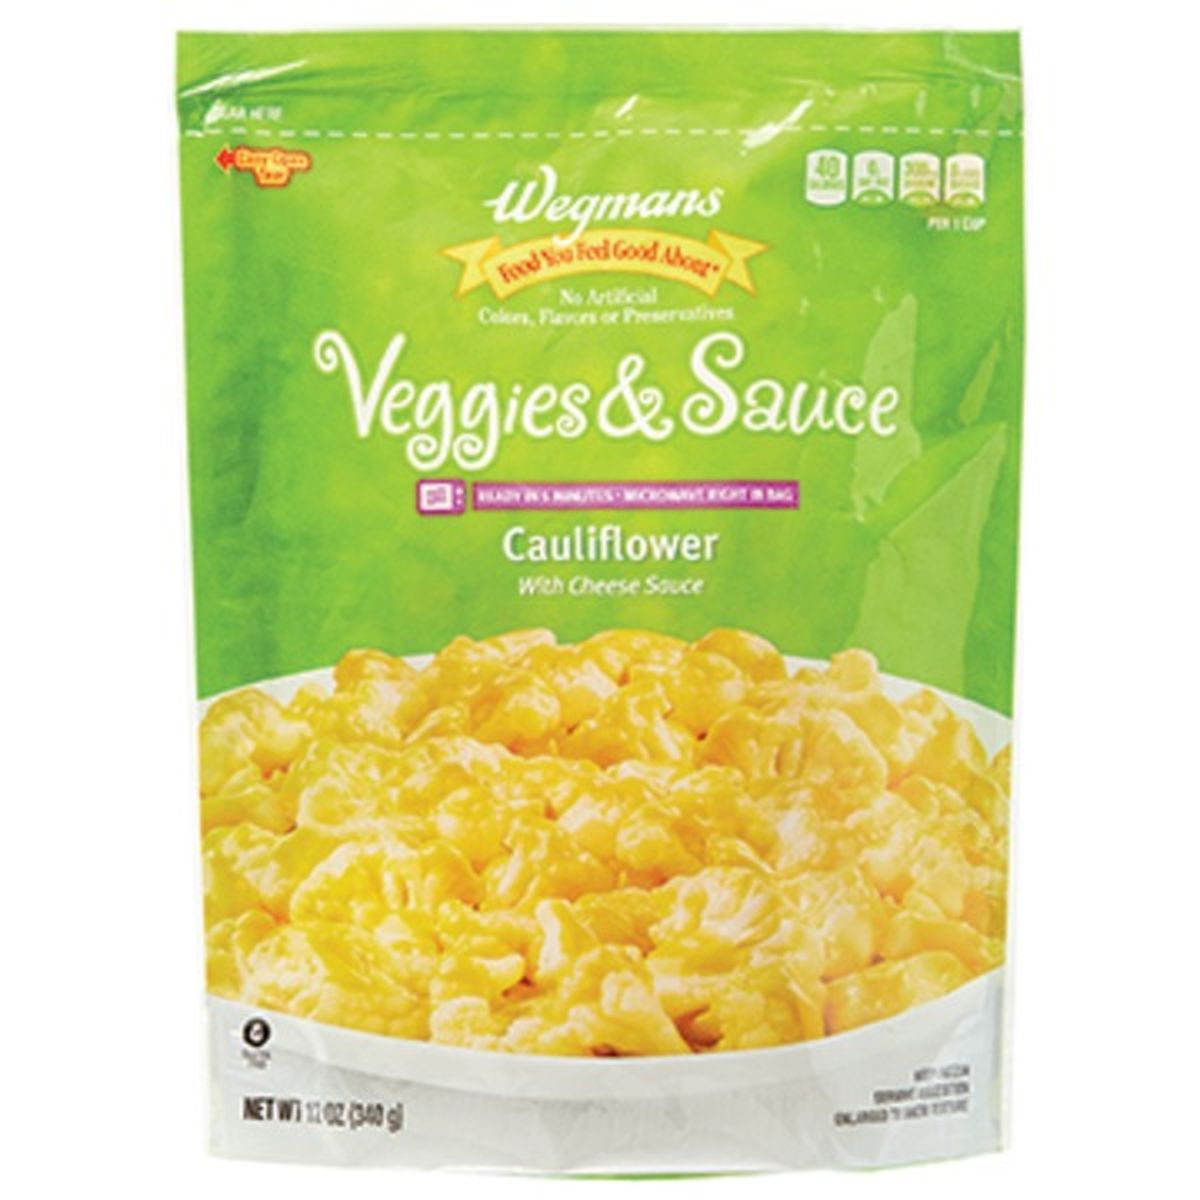 Calories in Wegmans Microwaveable Veggies & Sauce, Cauliflower with Cheese Sauce